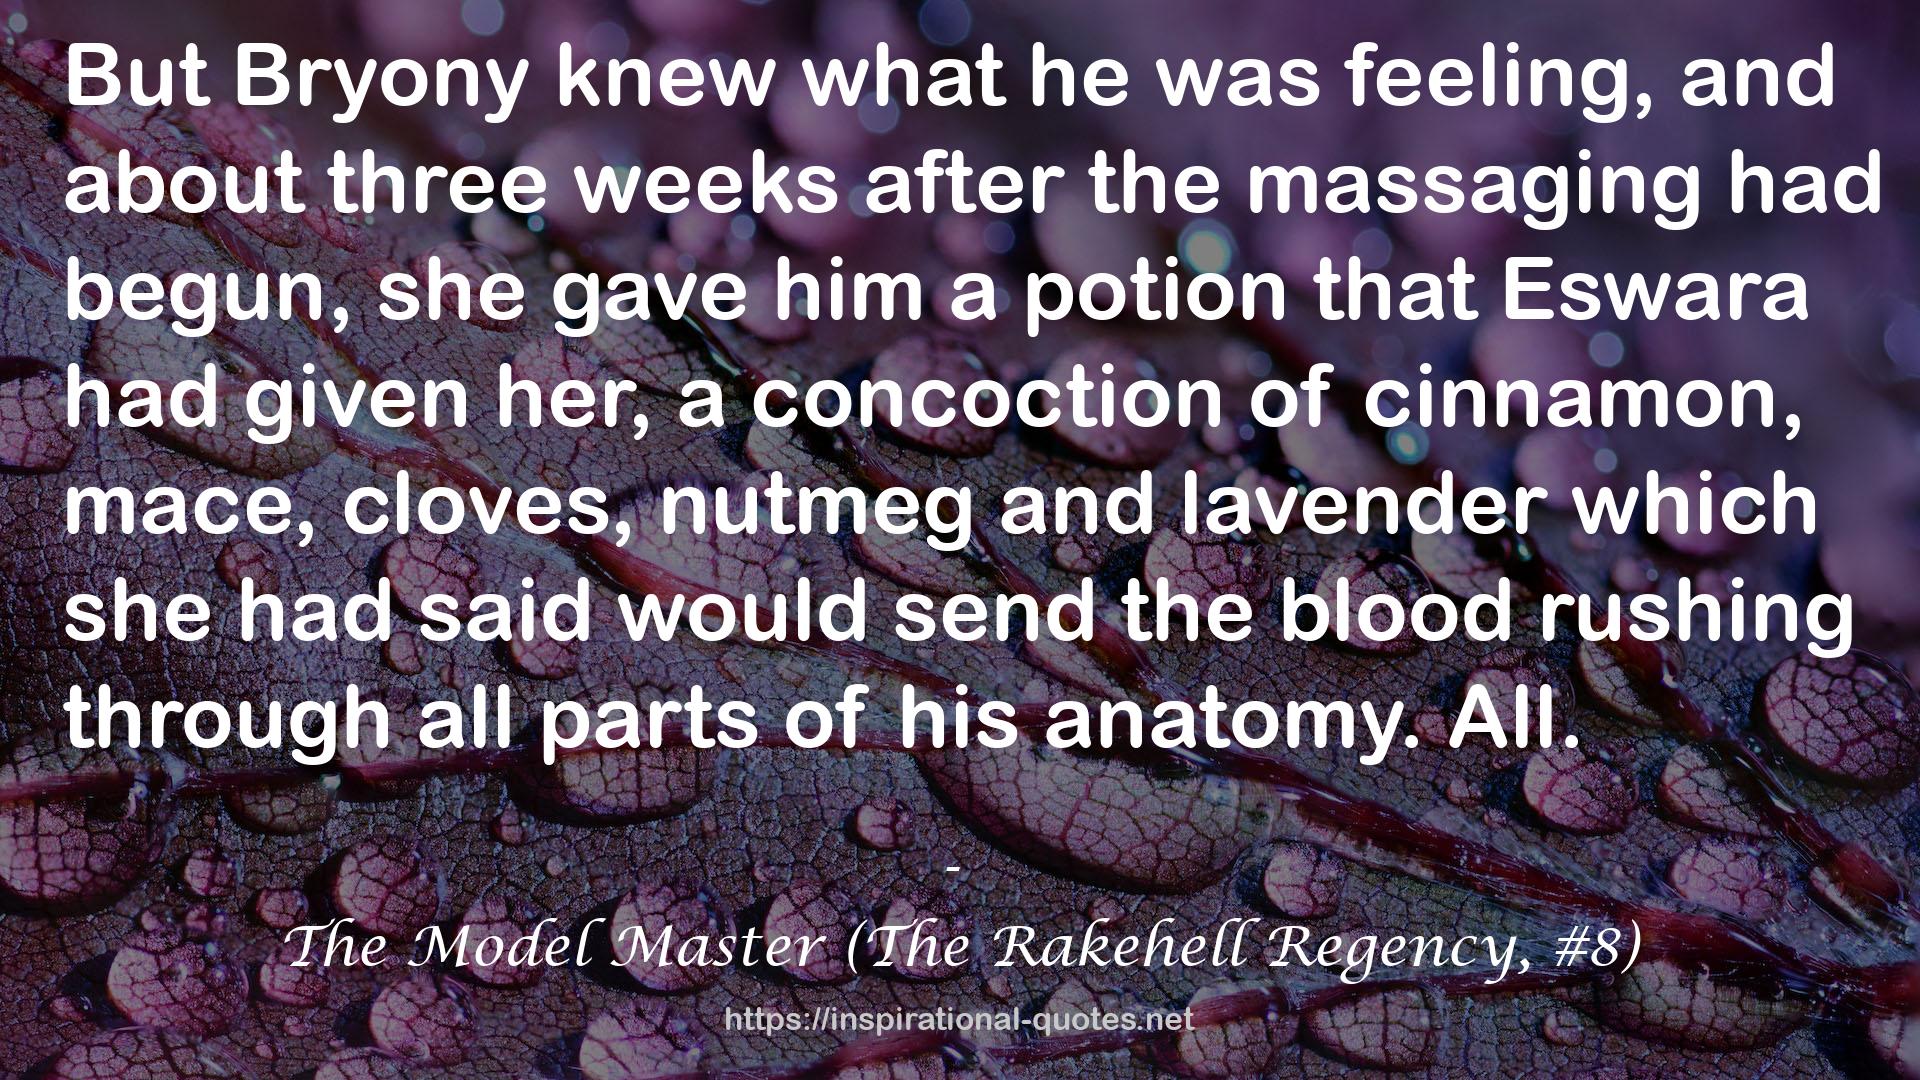 The Model Master (The Rakehell Regency, #8) QUOTES